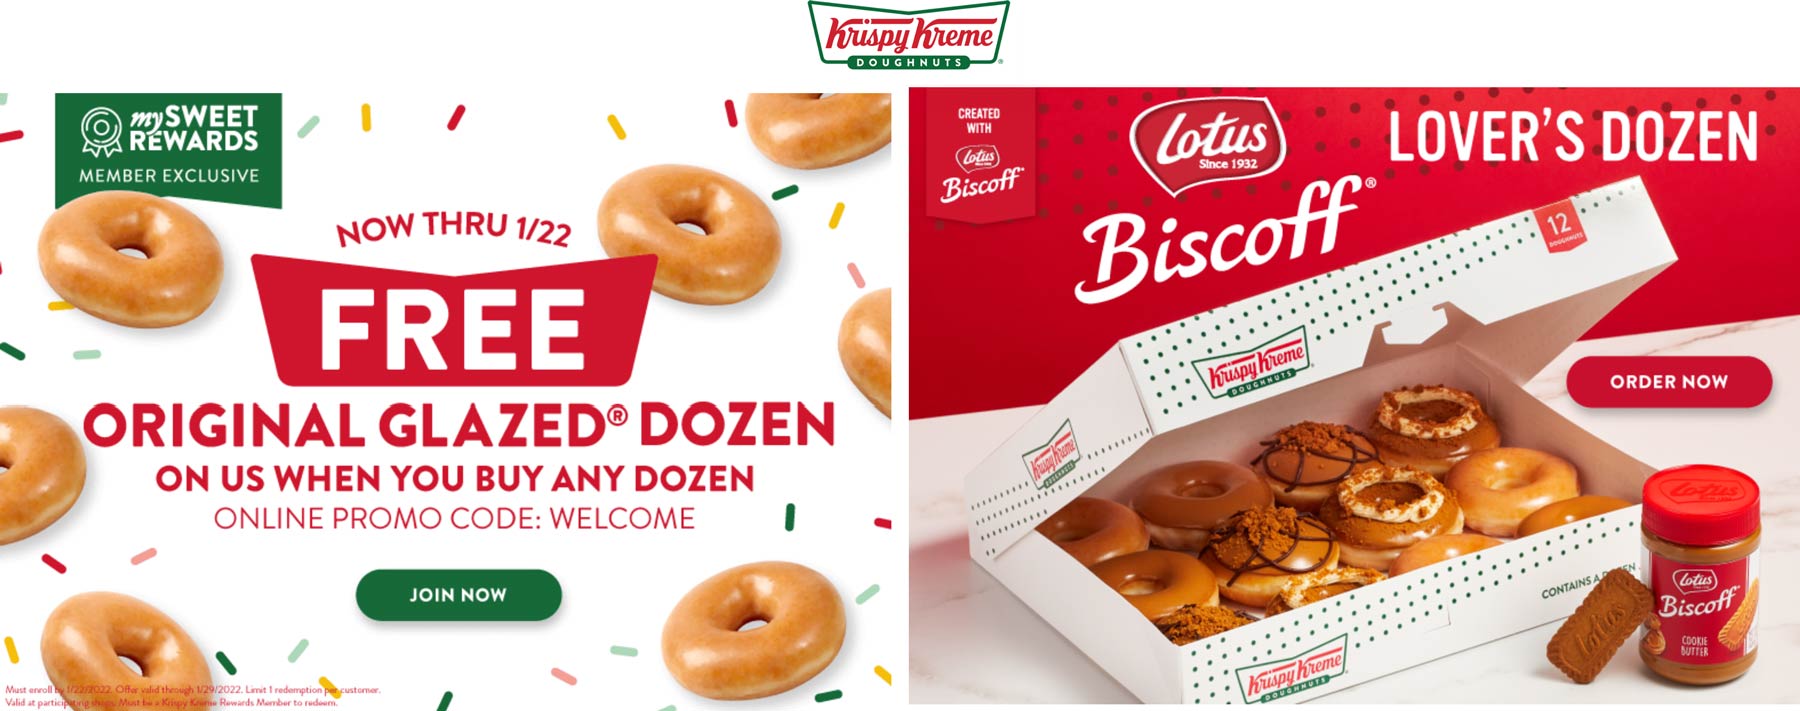 Krispy Kreme stores Coupon  Second dozen free online at Krispy Kreme via promo code WELCOME #krispykreme 